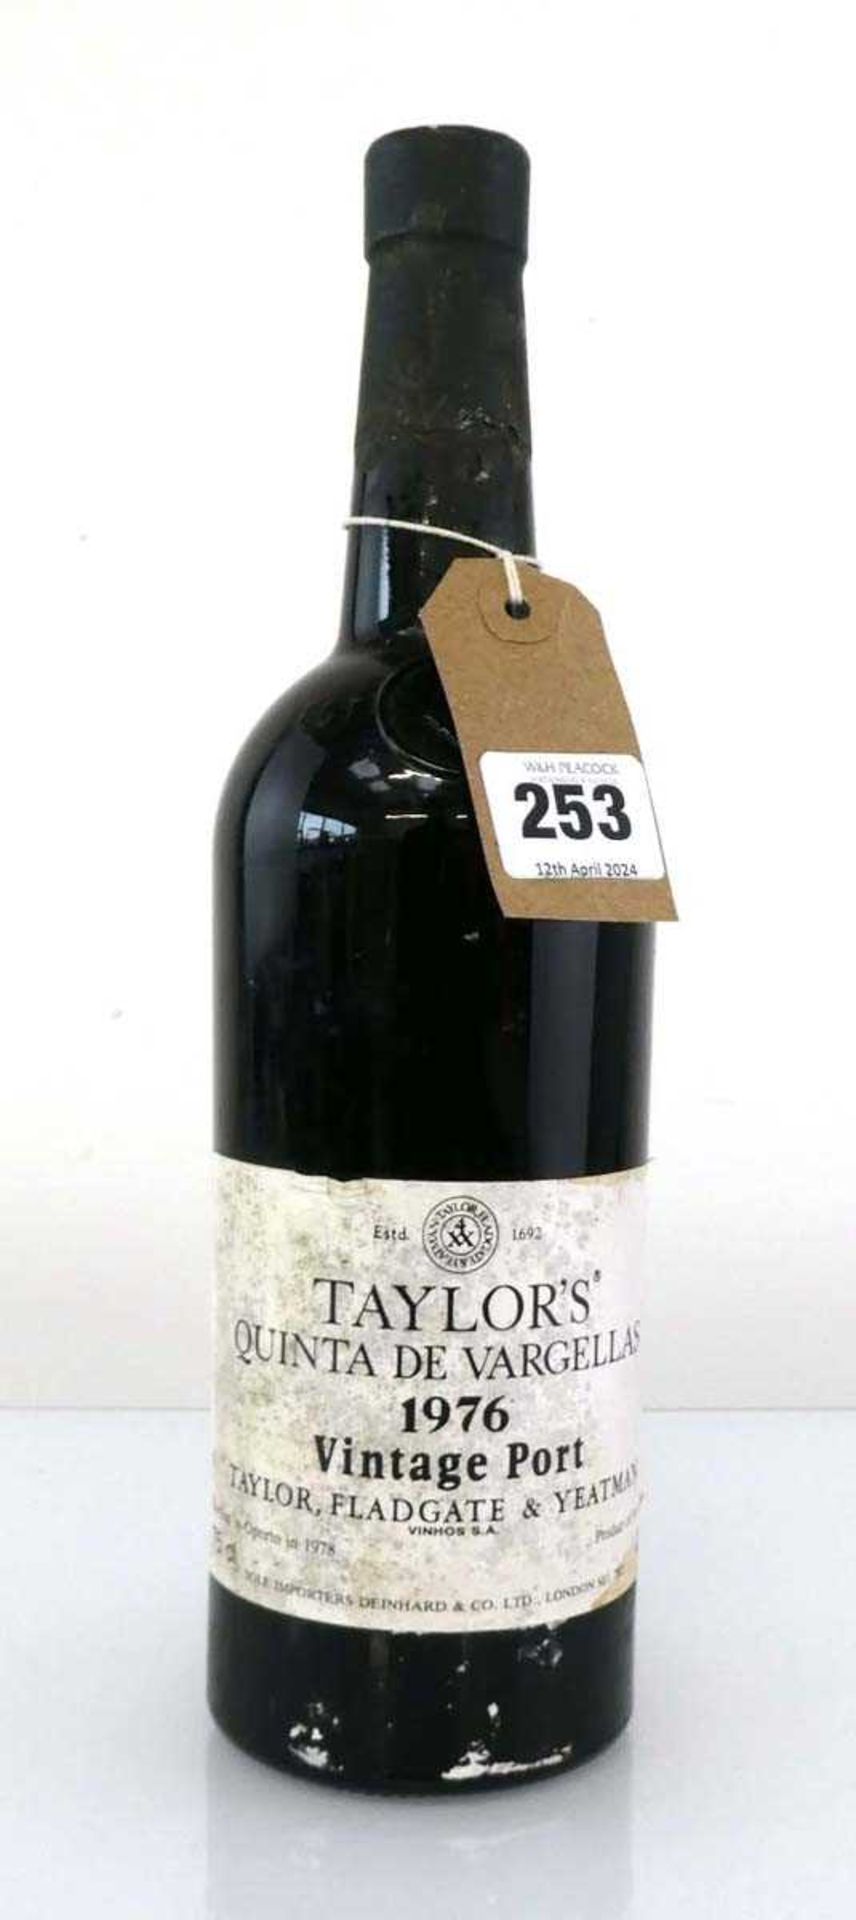 A bottle of Taylor Fladgate & Yeatman Taylor's Quinta De Vargellas 1976 Vintage Port (ullage top